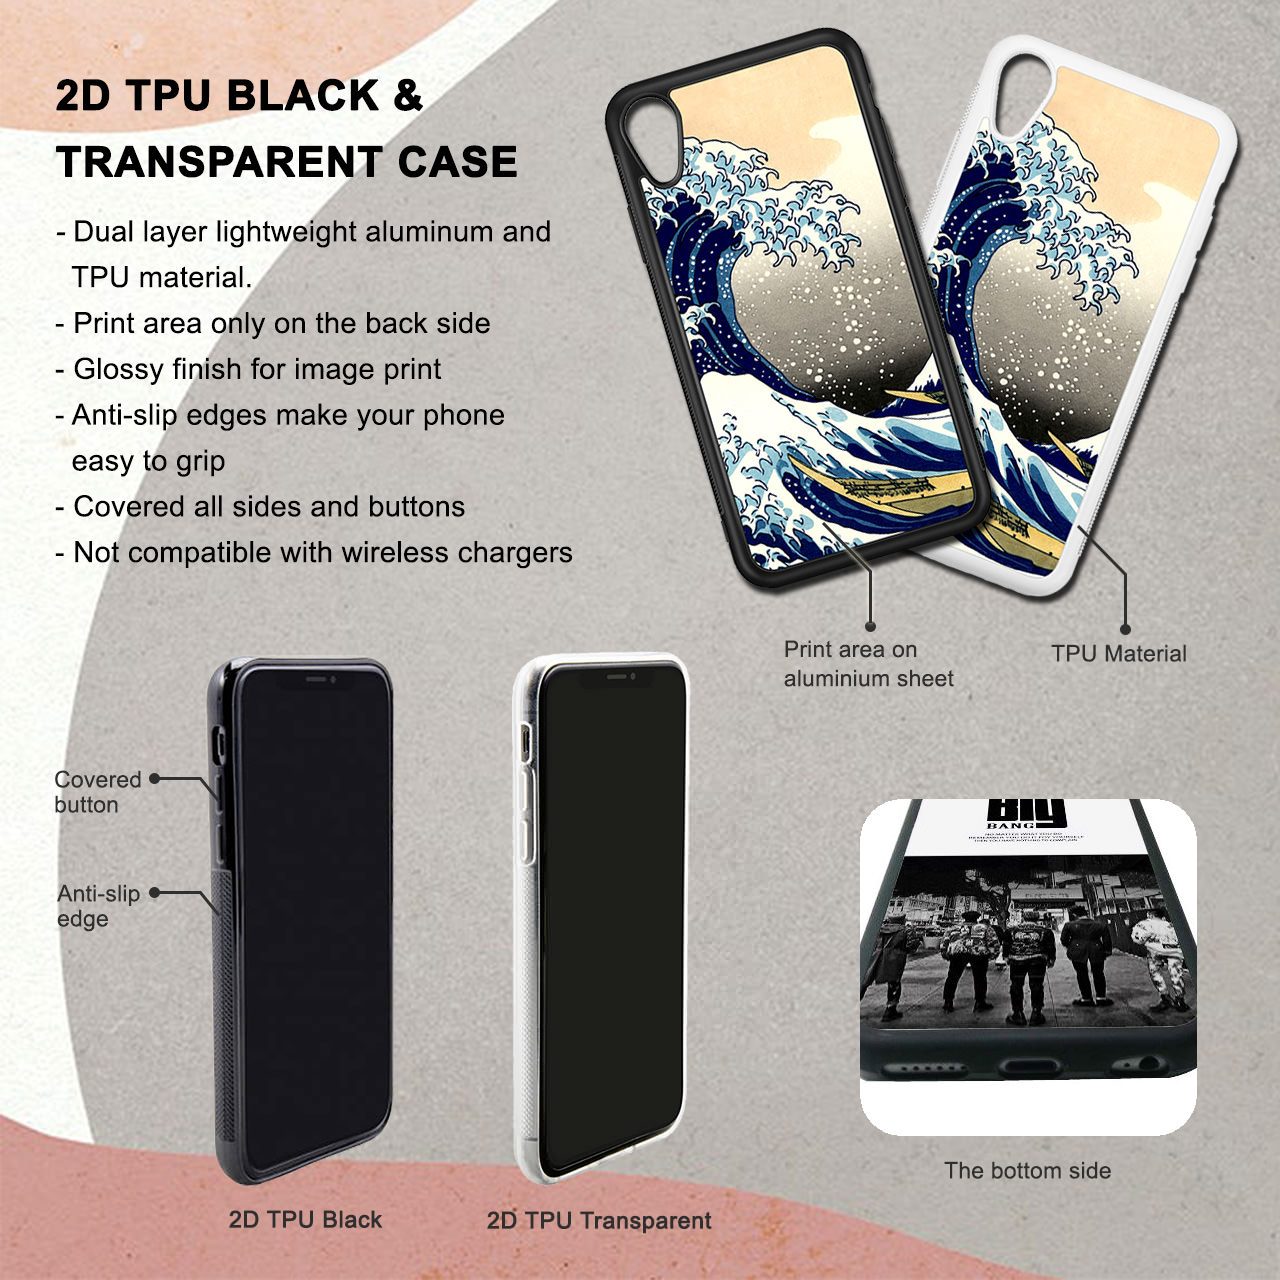 90's Cup Jazz iPhone 6 / 6s Plus Case